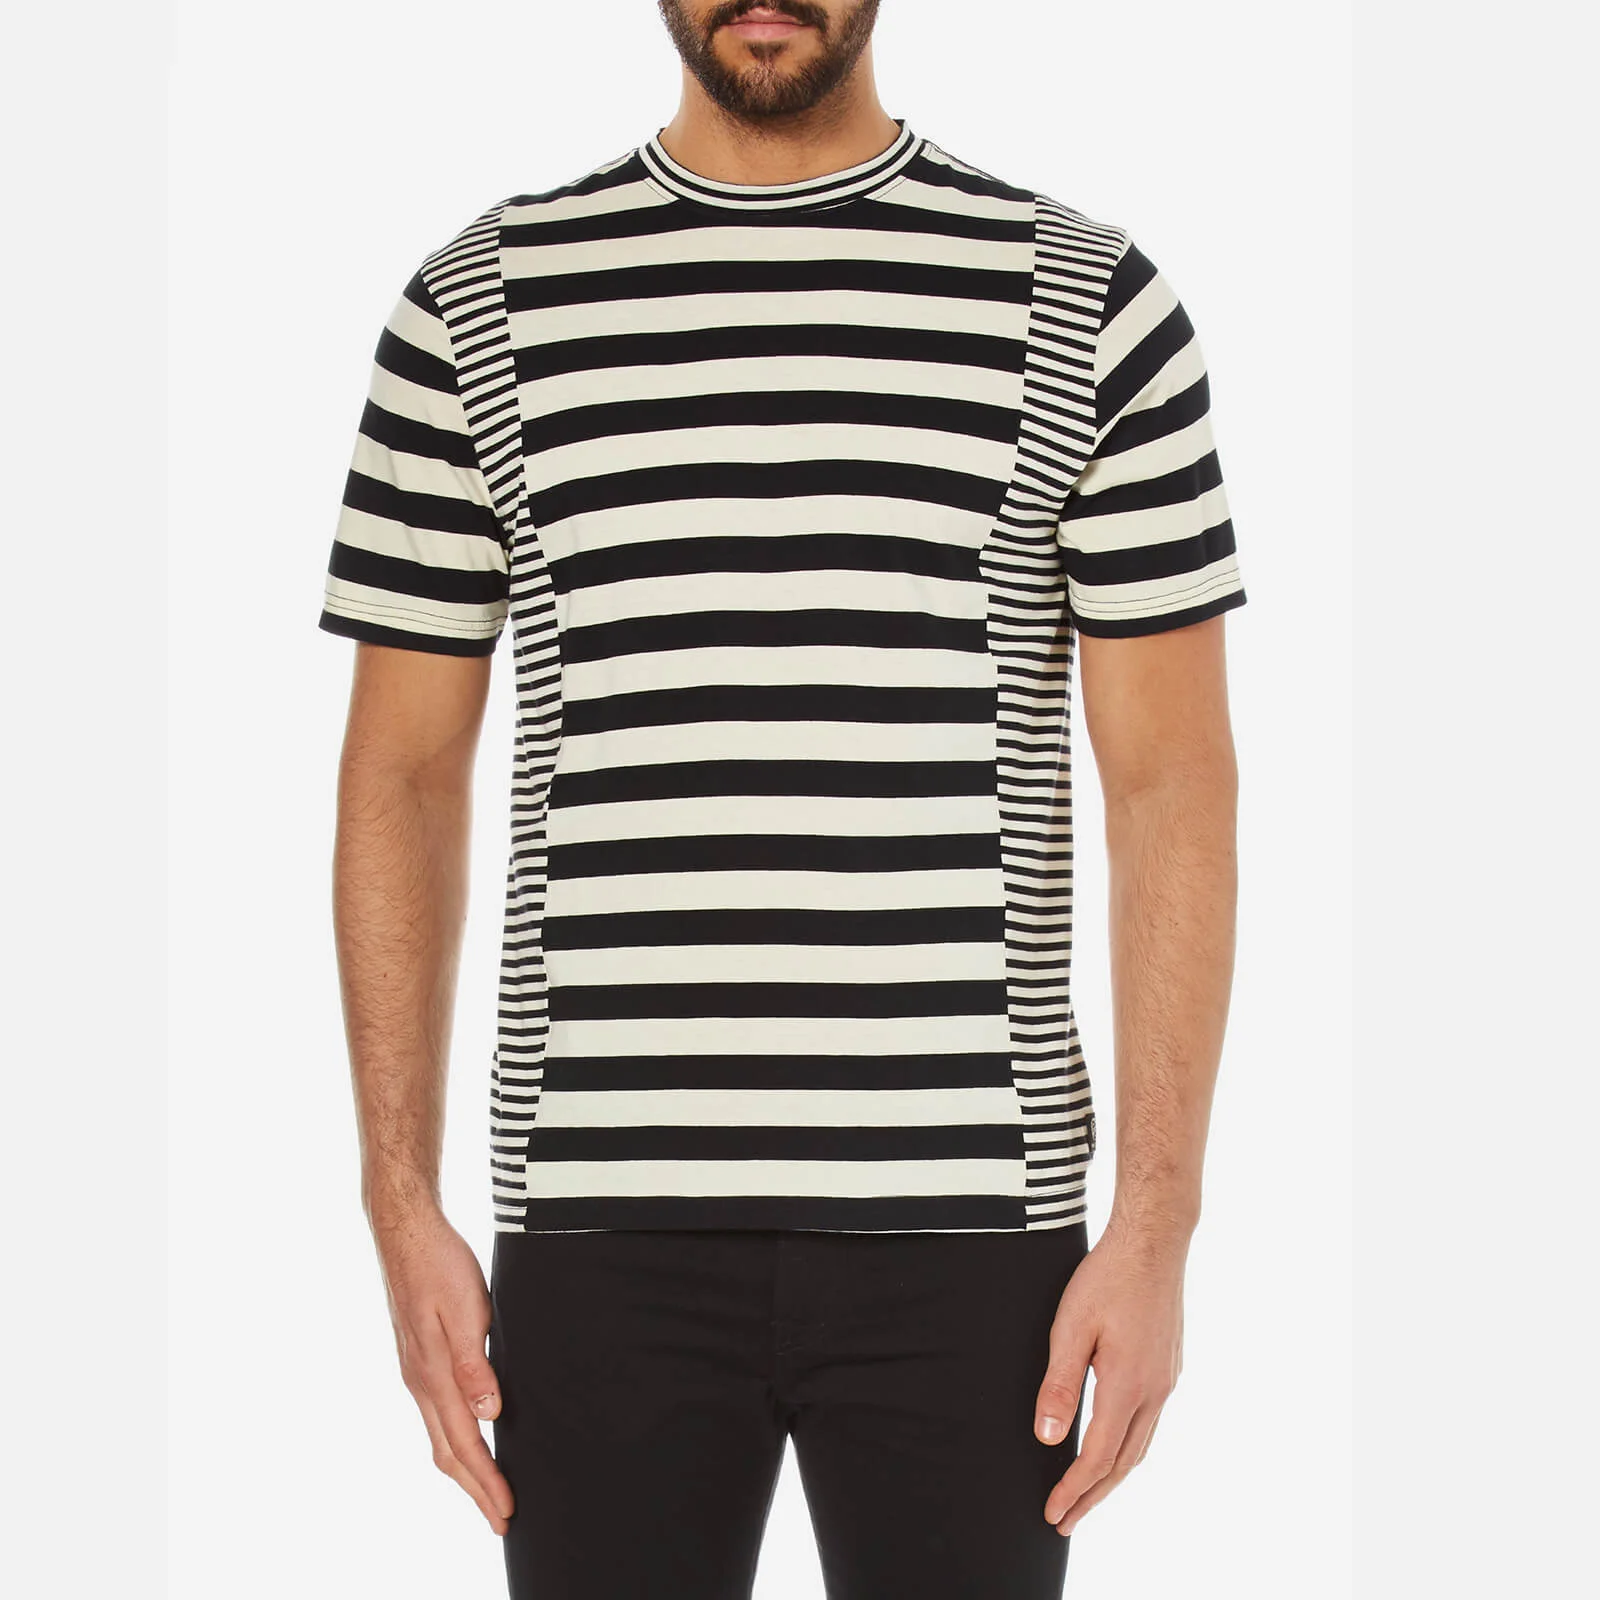 PS by Paul Smith Men's Crew Neck Stripe T-Shirt - Black/White Image 1